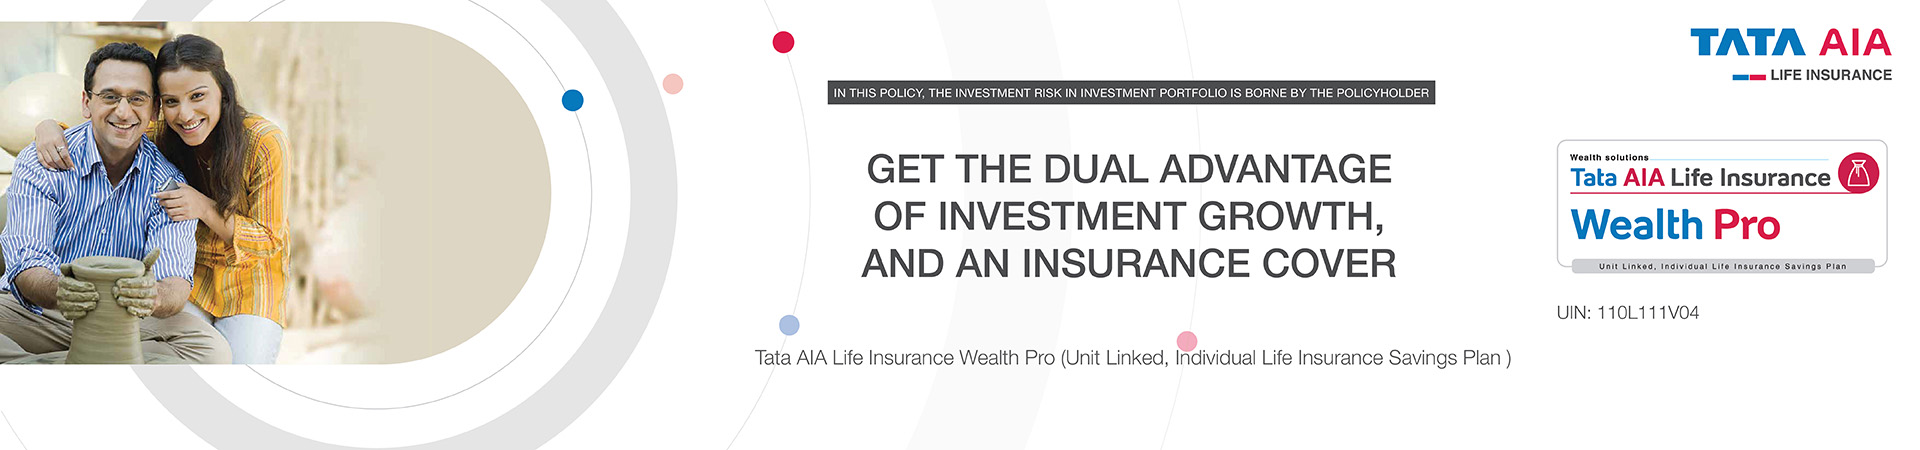 NRI - tata aig life insurance wealth pro